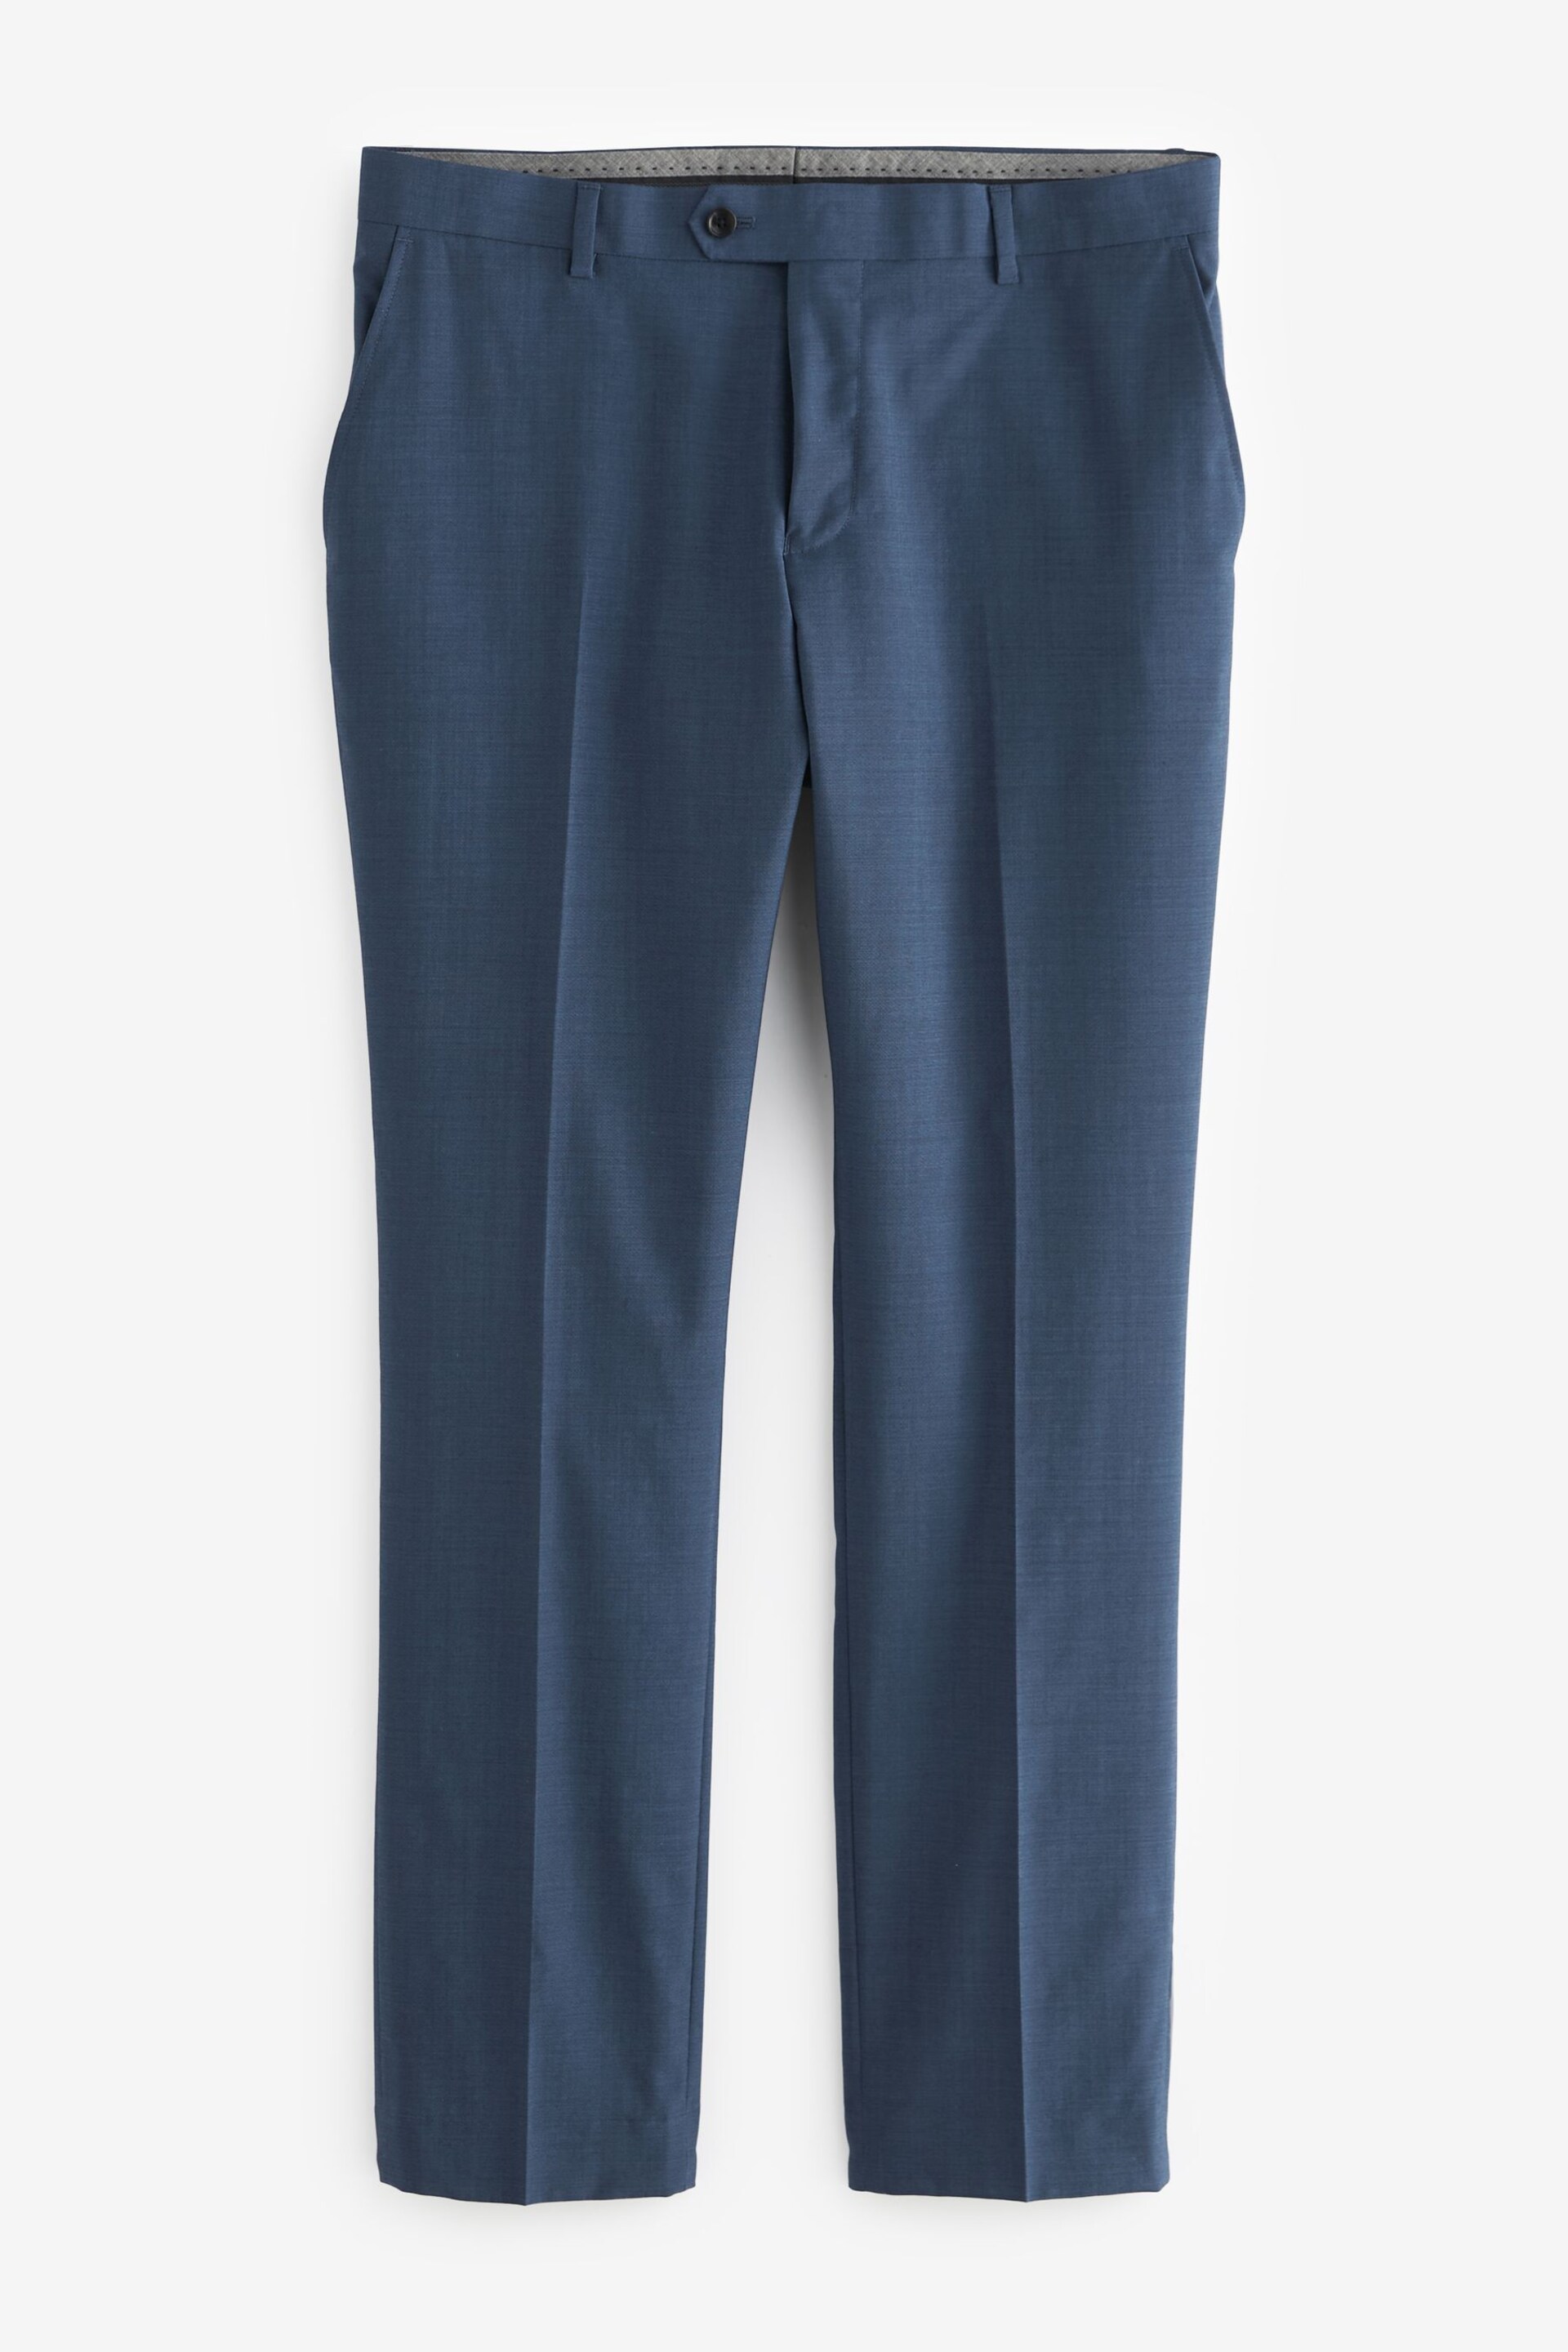 Light Blue Light Blue Slim Fit Signature Tollegno Wool Plain Suit Trousers - Image 2 of 5